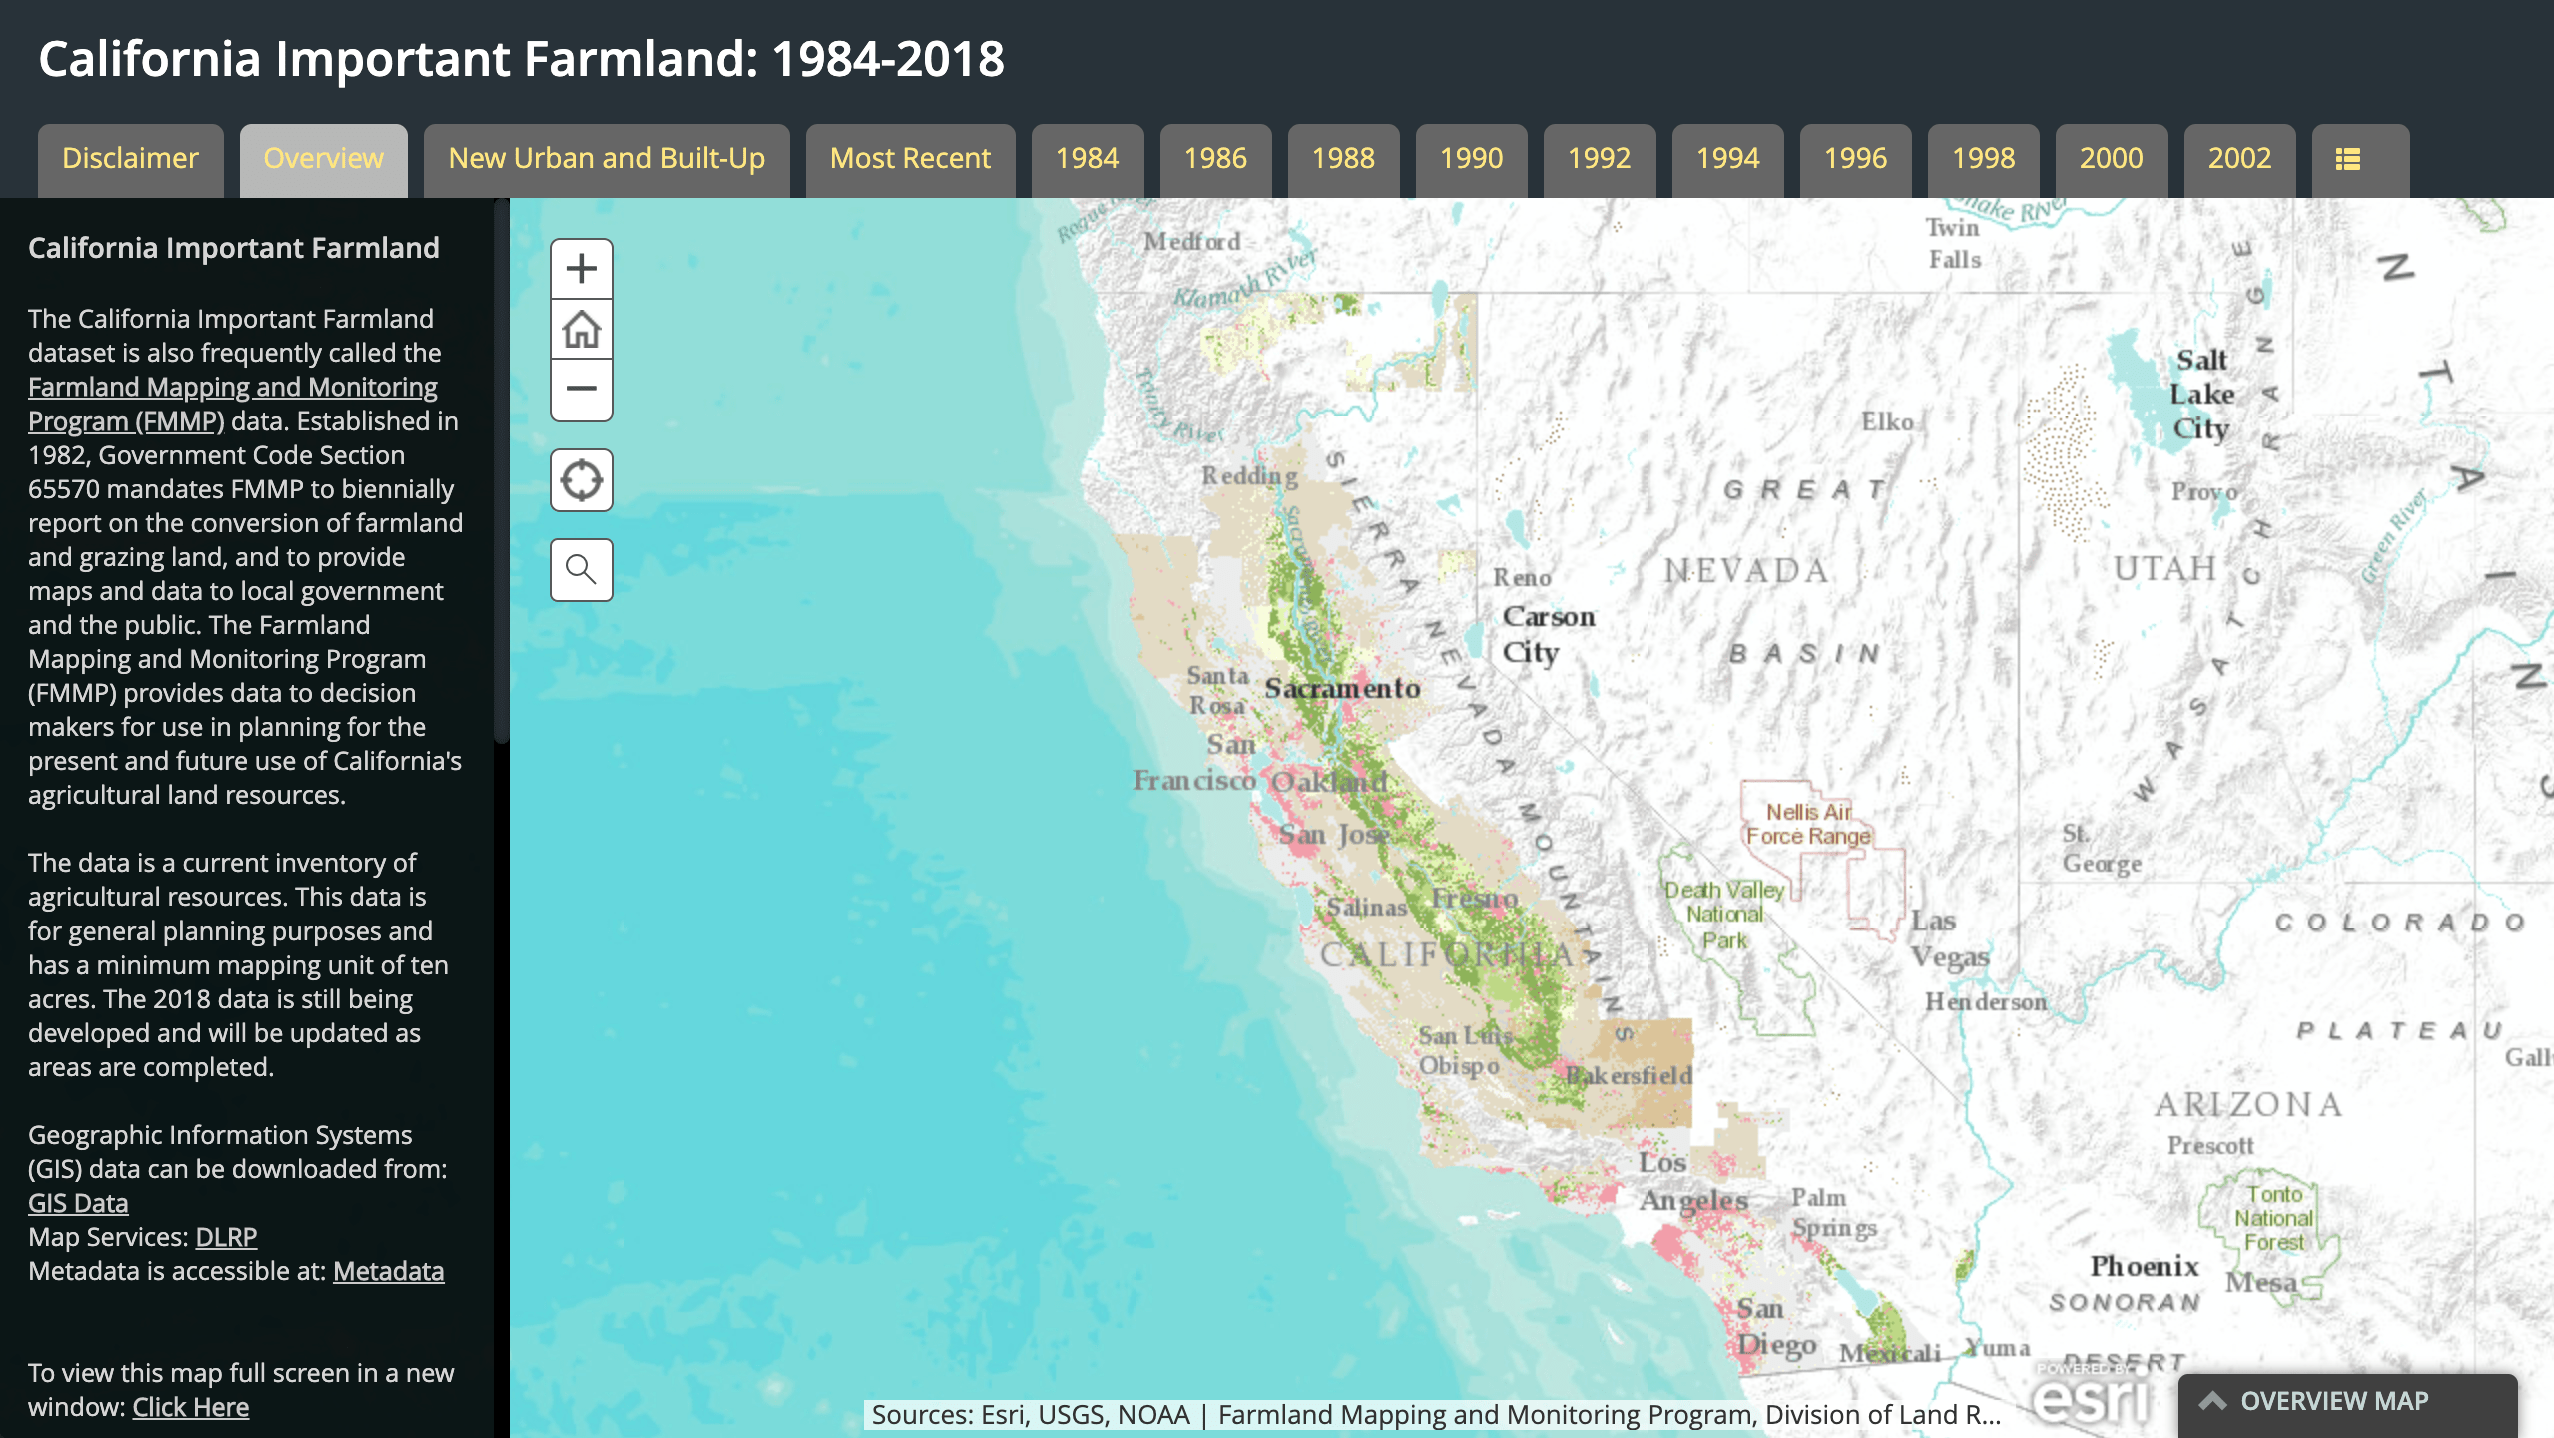 California Important Farmland - Time Series